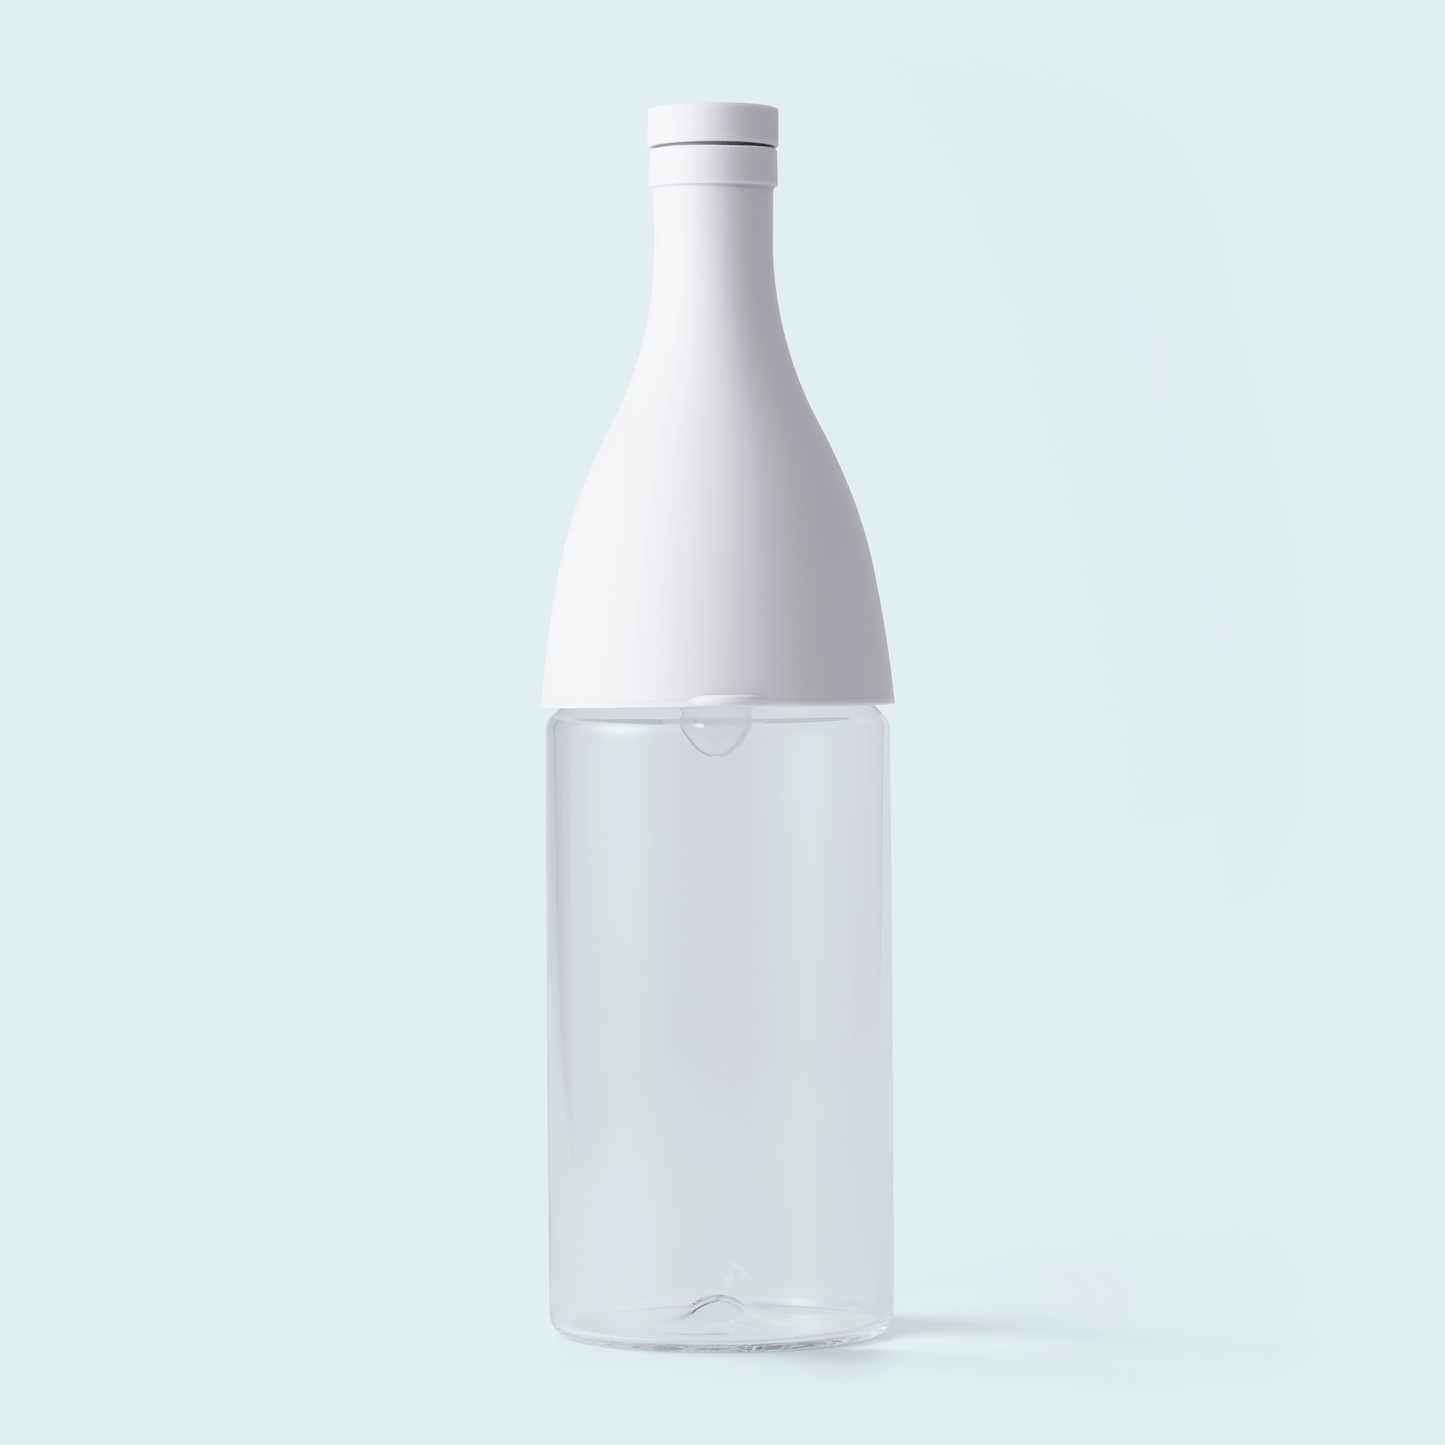 Mizudashi bottle